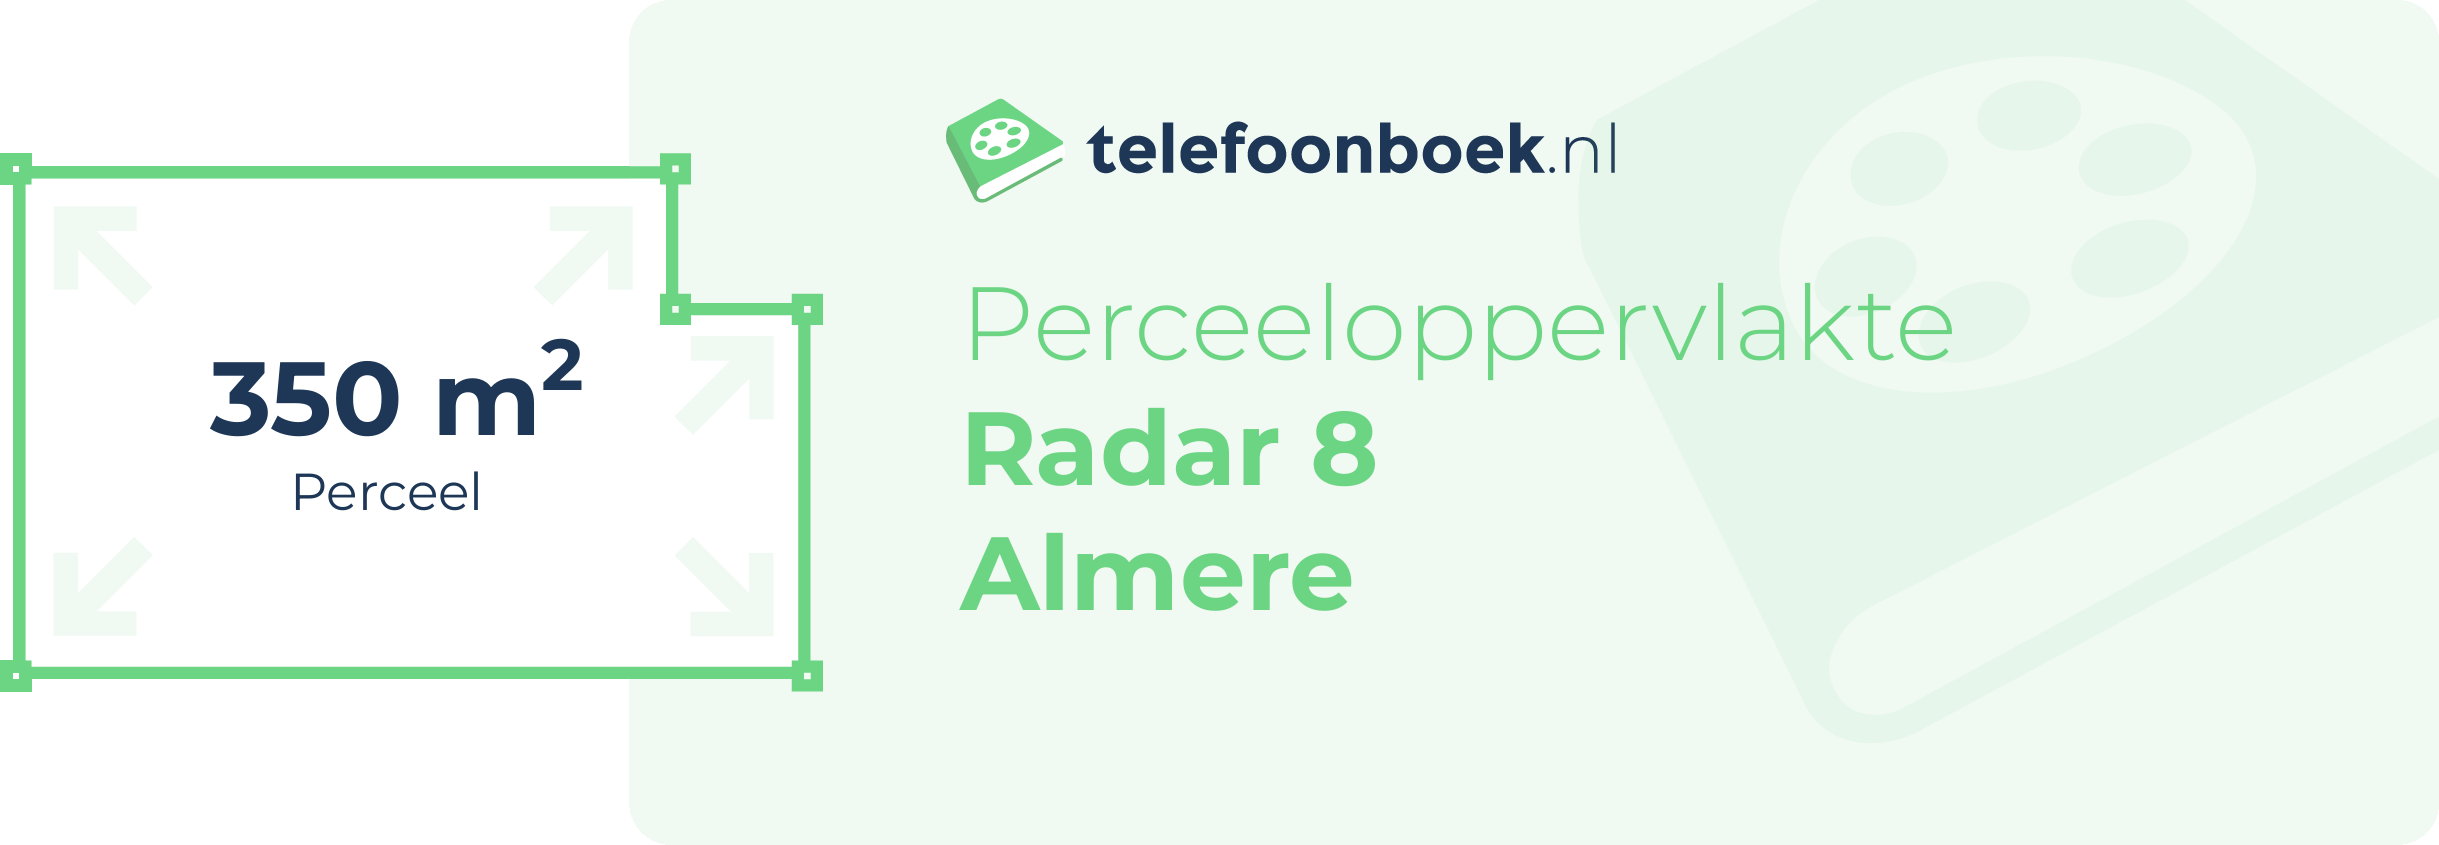 Perceeloppervlakte Radar 8 Almere